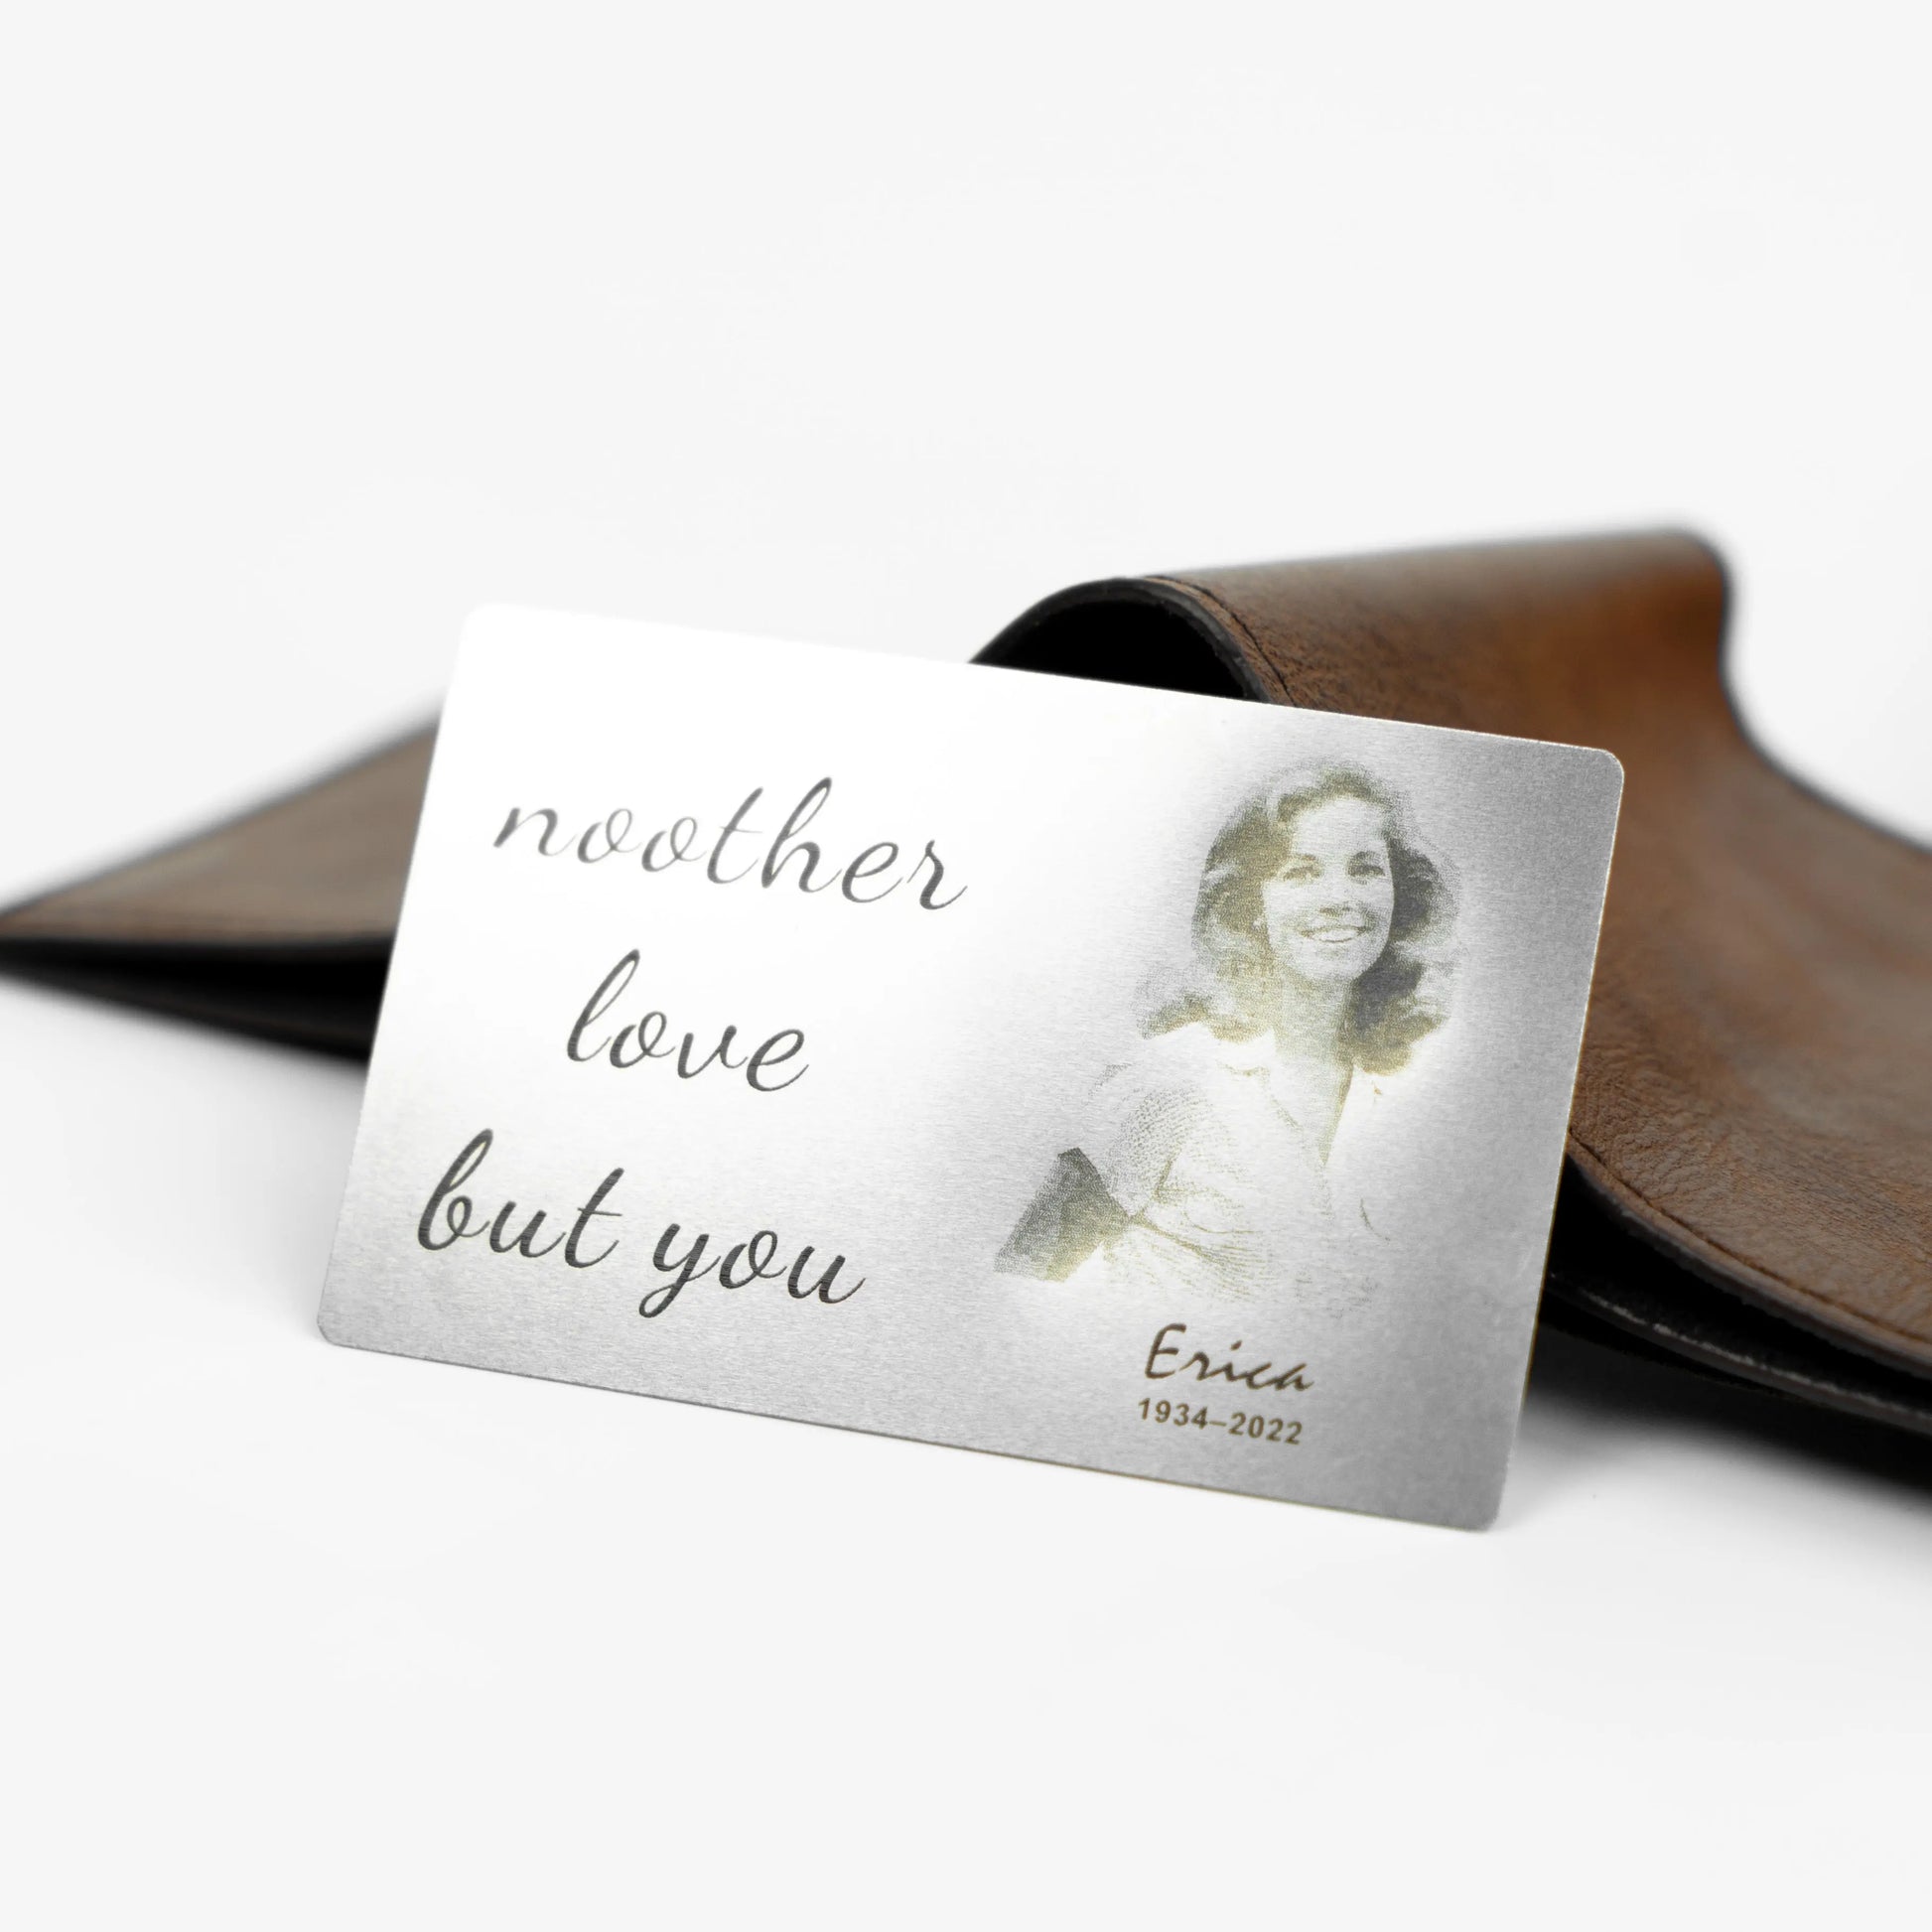 FairWonder Personalized Photo Wallet Purse Card Metal Keepsake Gift @anita.fiberartist